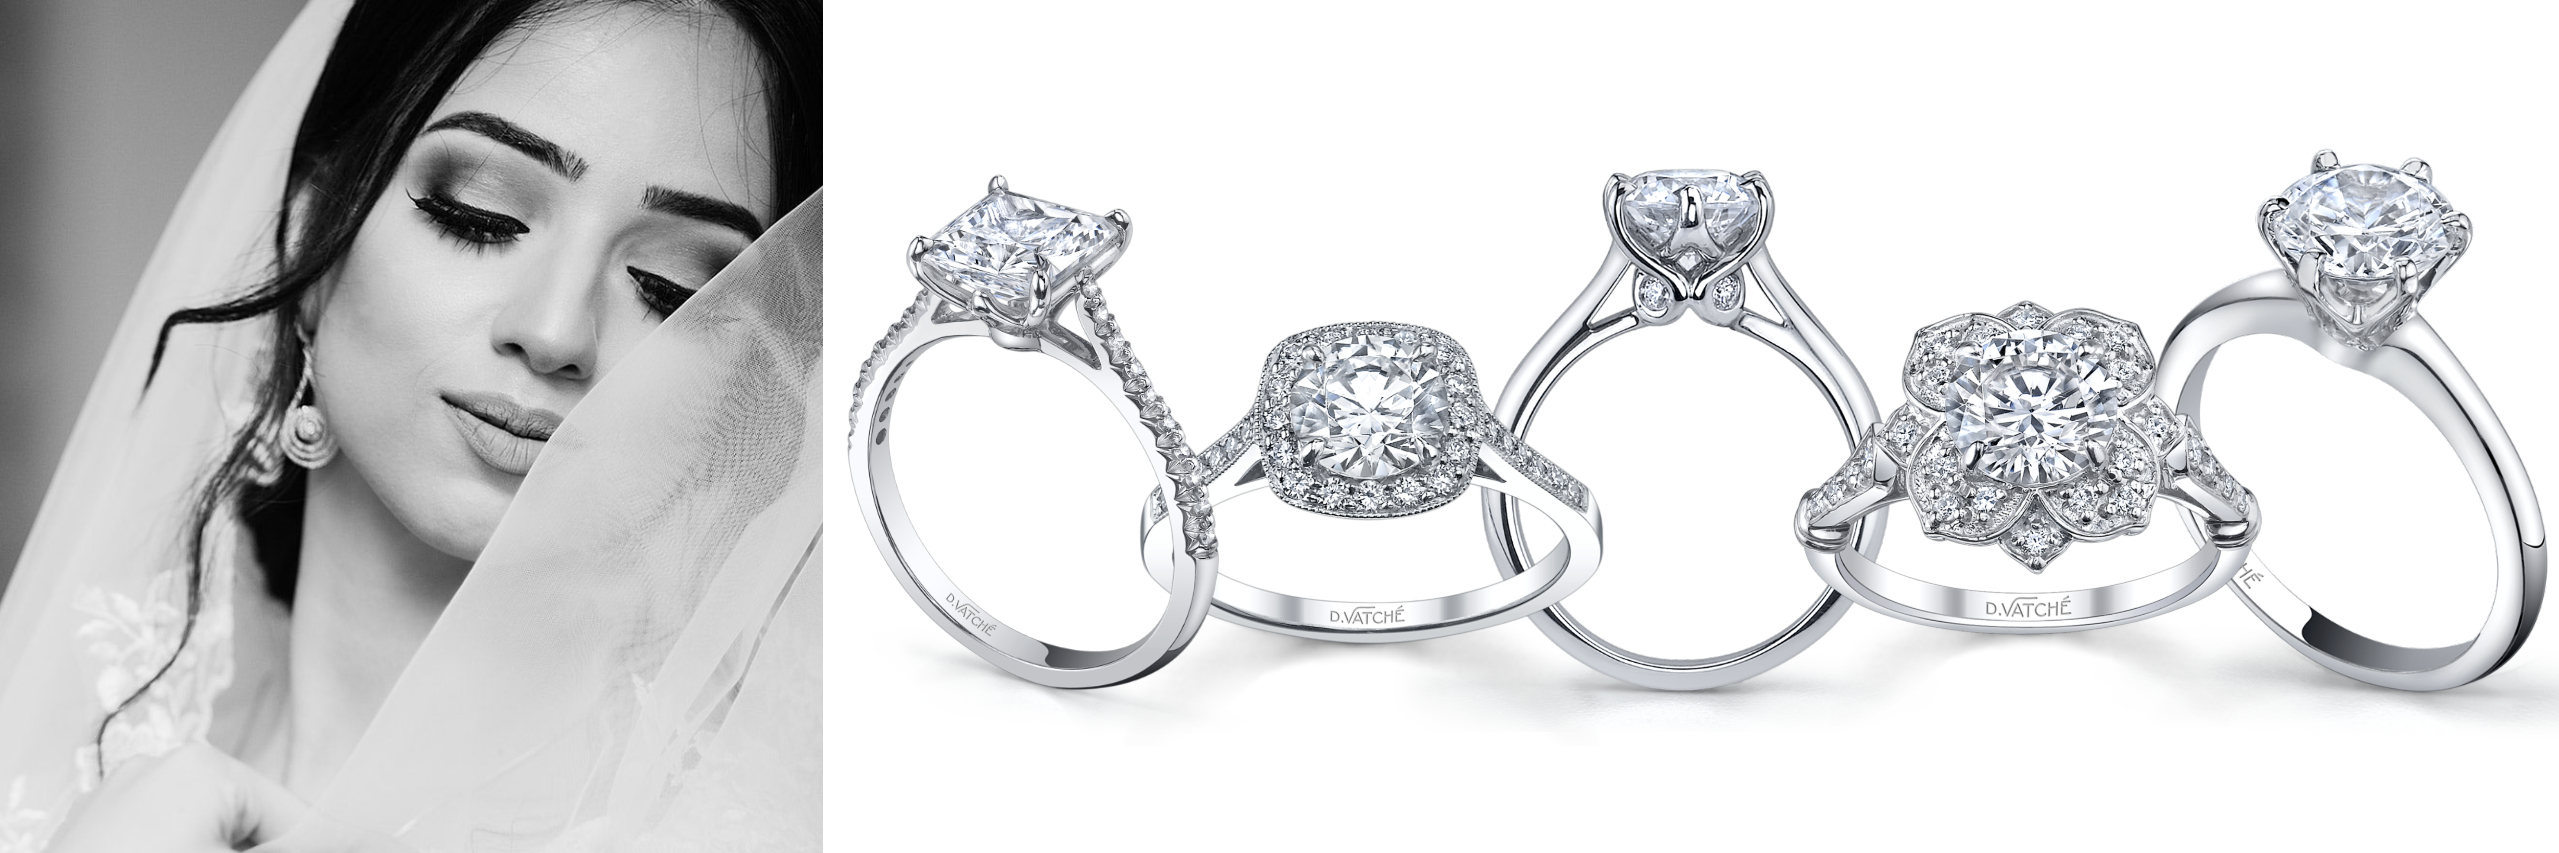 New York Designer Laurel Elliott Spanish Love Quote Sterling Silver Ring SZ  7.75 | eBay